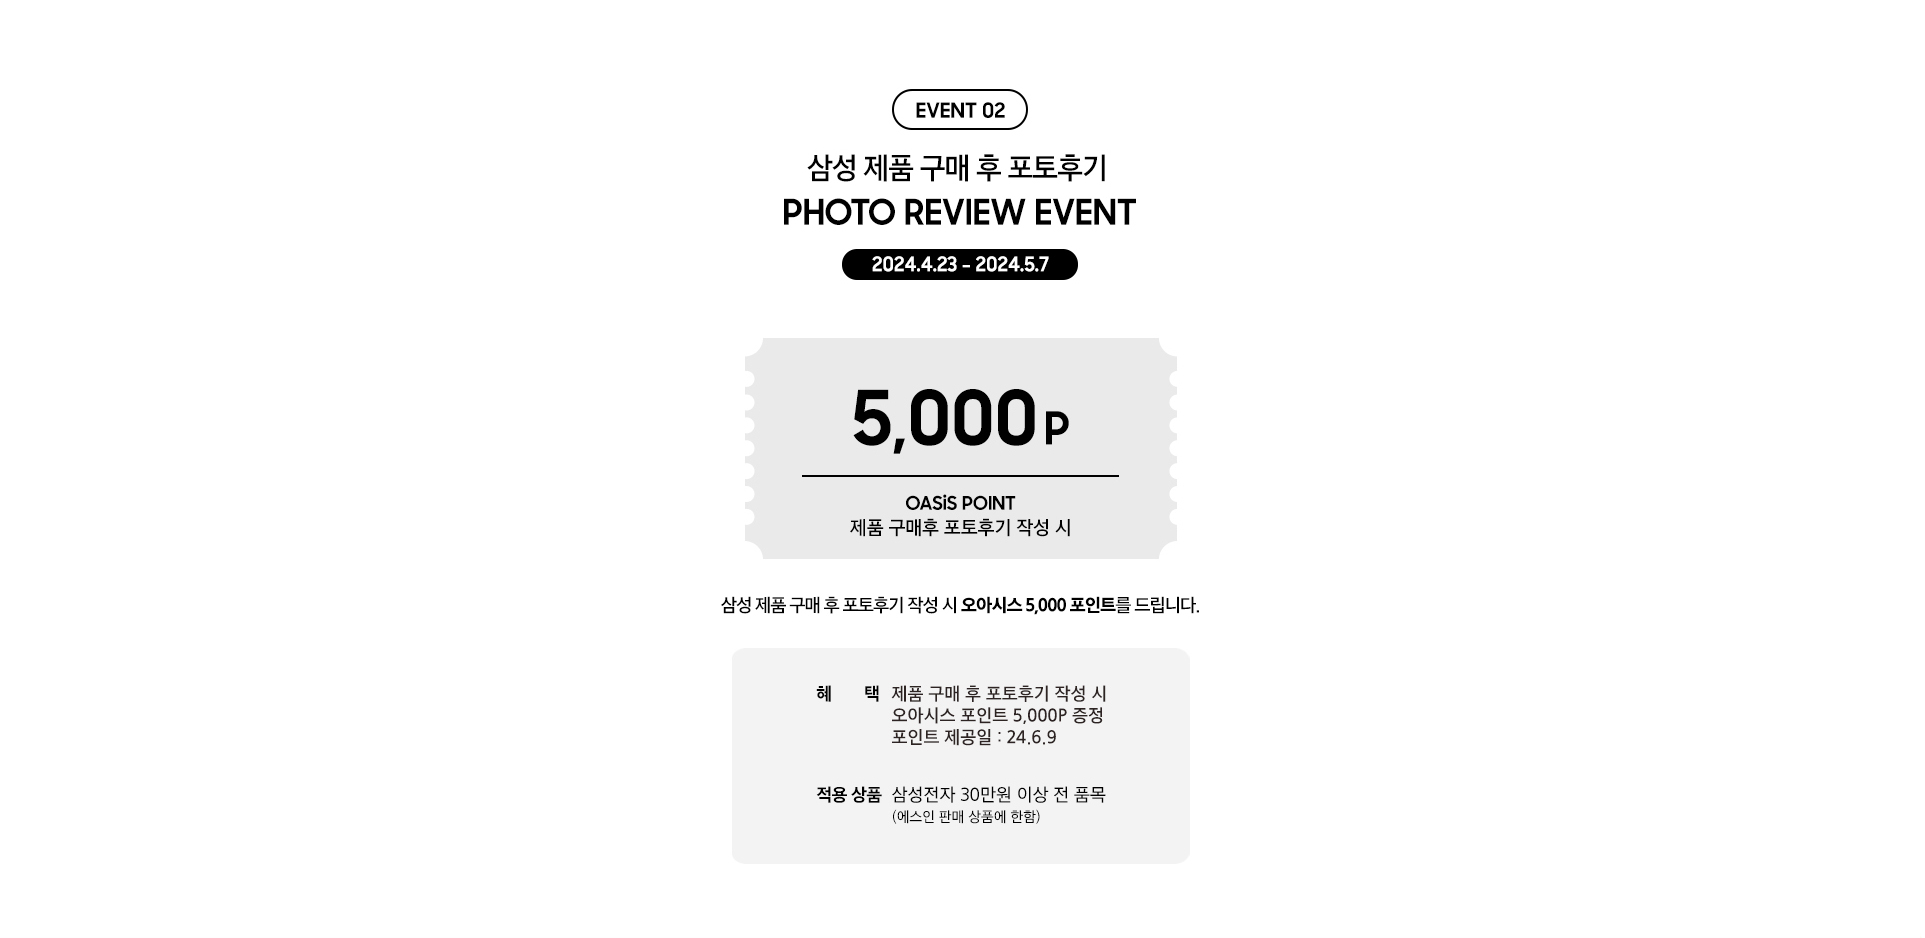 EVENT 02.삼성 제품 구매 후 포토후기